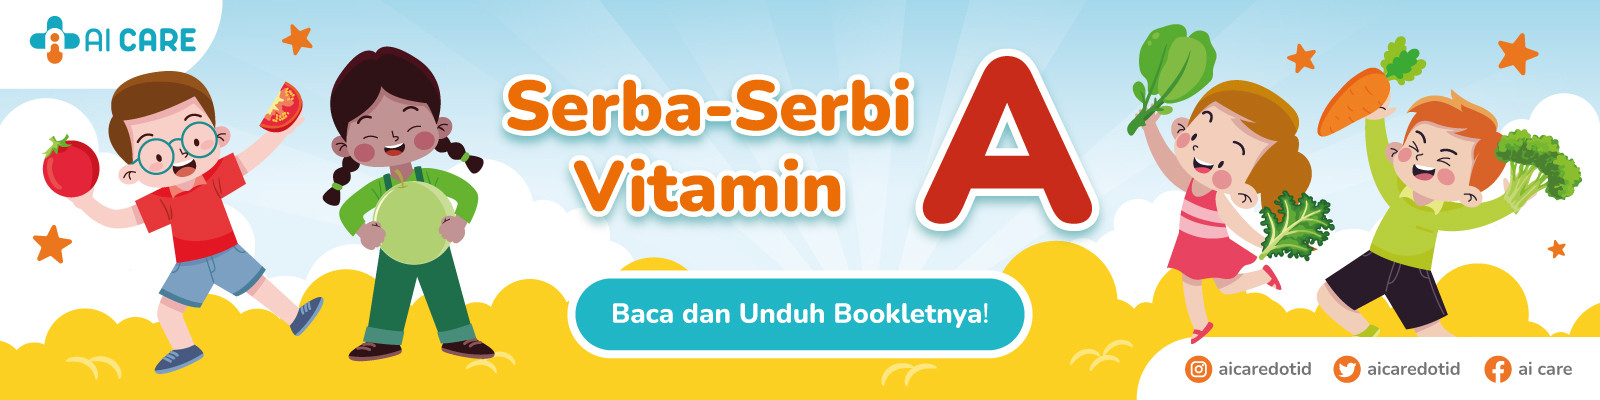 Serba-Serbi Vitamin A